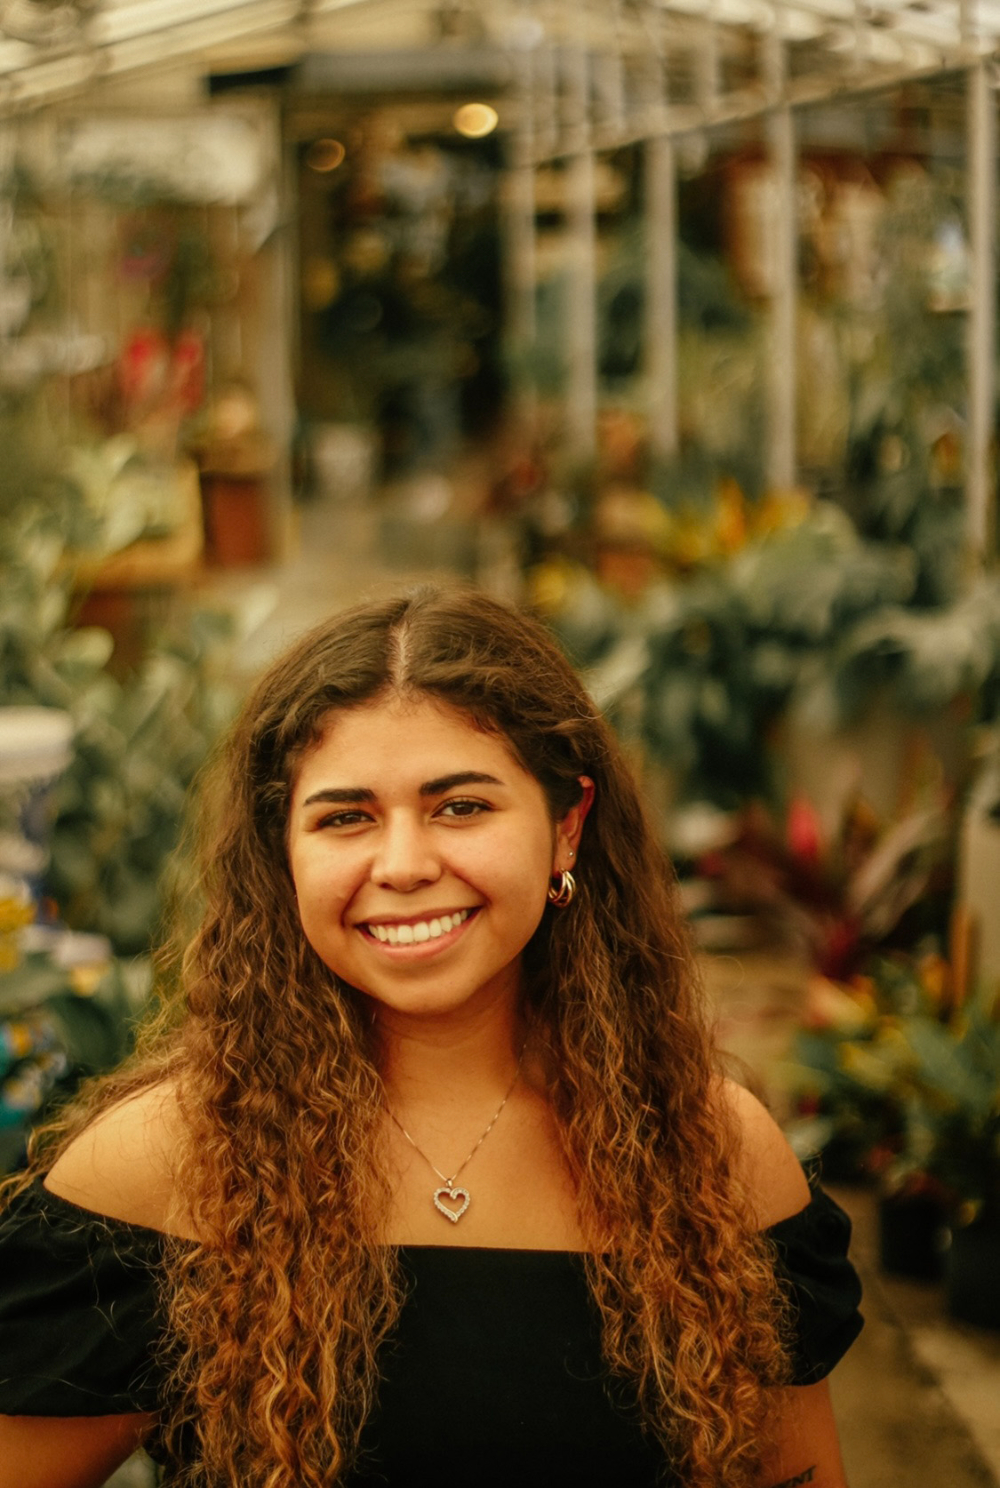 headshot of Marissa Acevedo, standing in a greenhouse